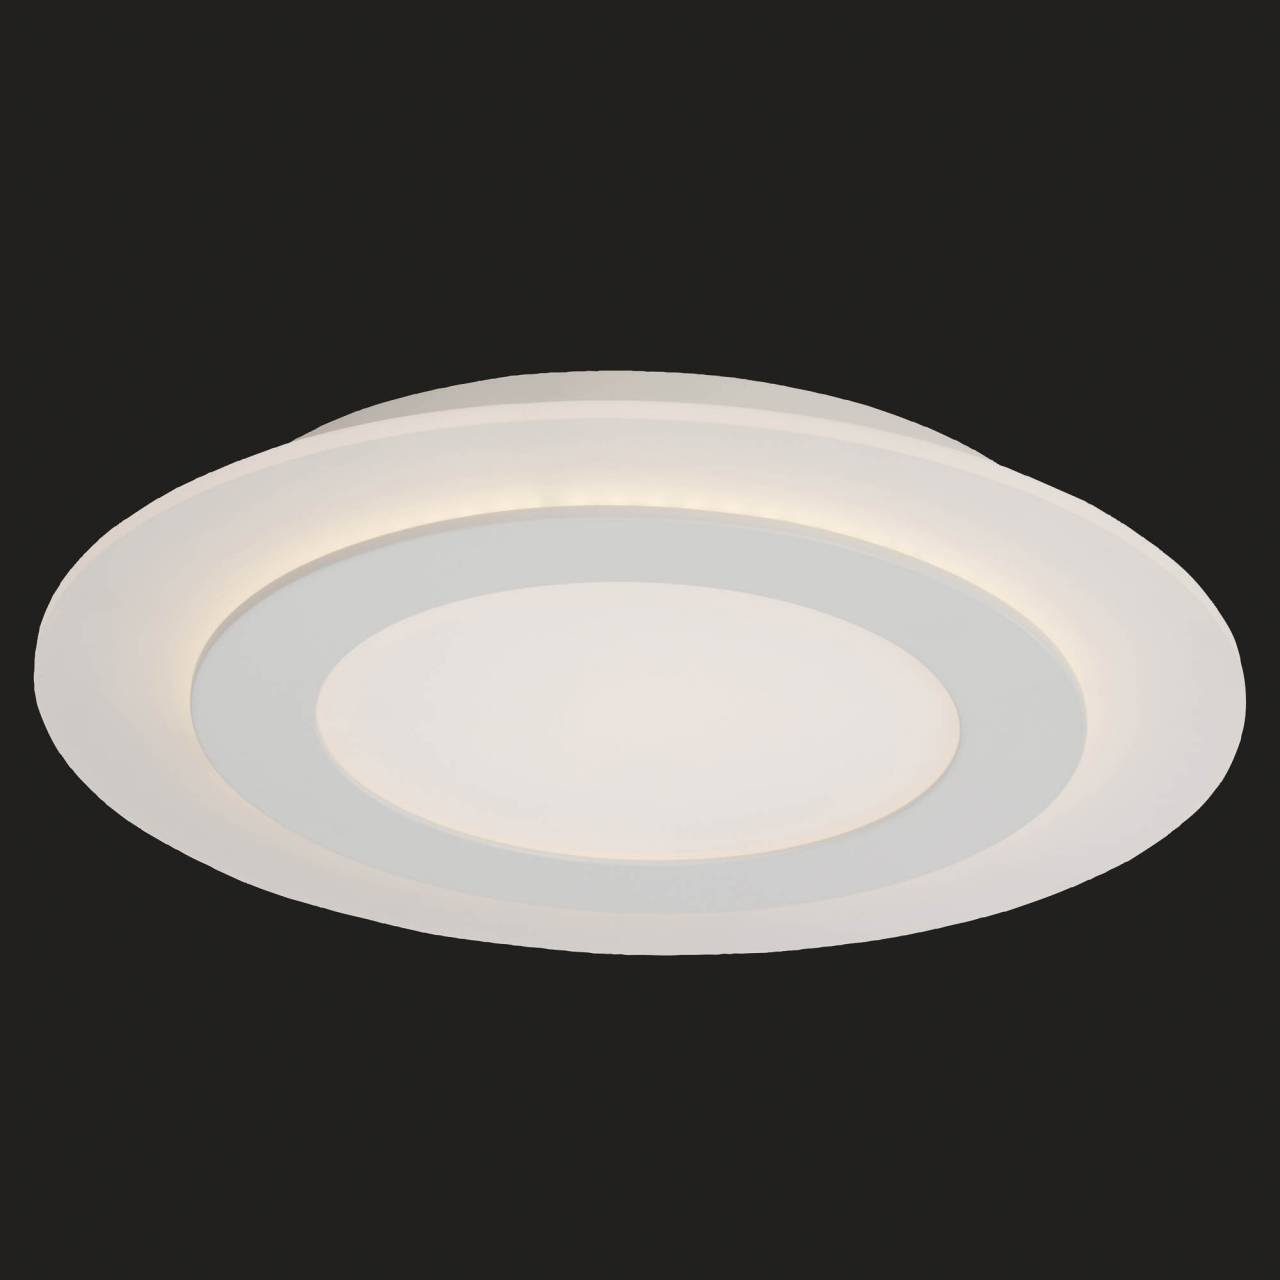 AEG LED warmweiß, Aluminium/Acryl, LED lm, 35 Deckenleuchte cm, Warmweiß, Ø weiß wechselbar, Karia, 2800 dimmbar